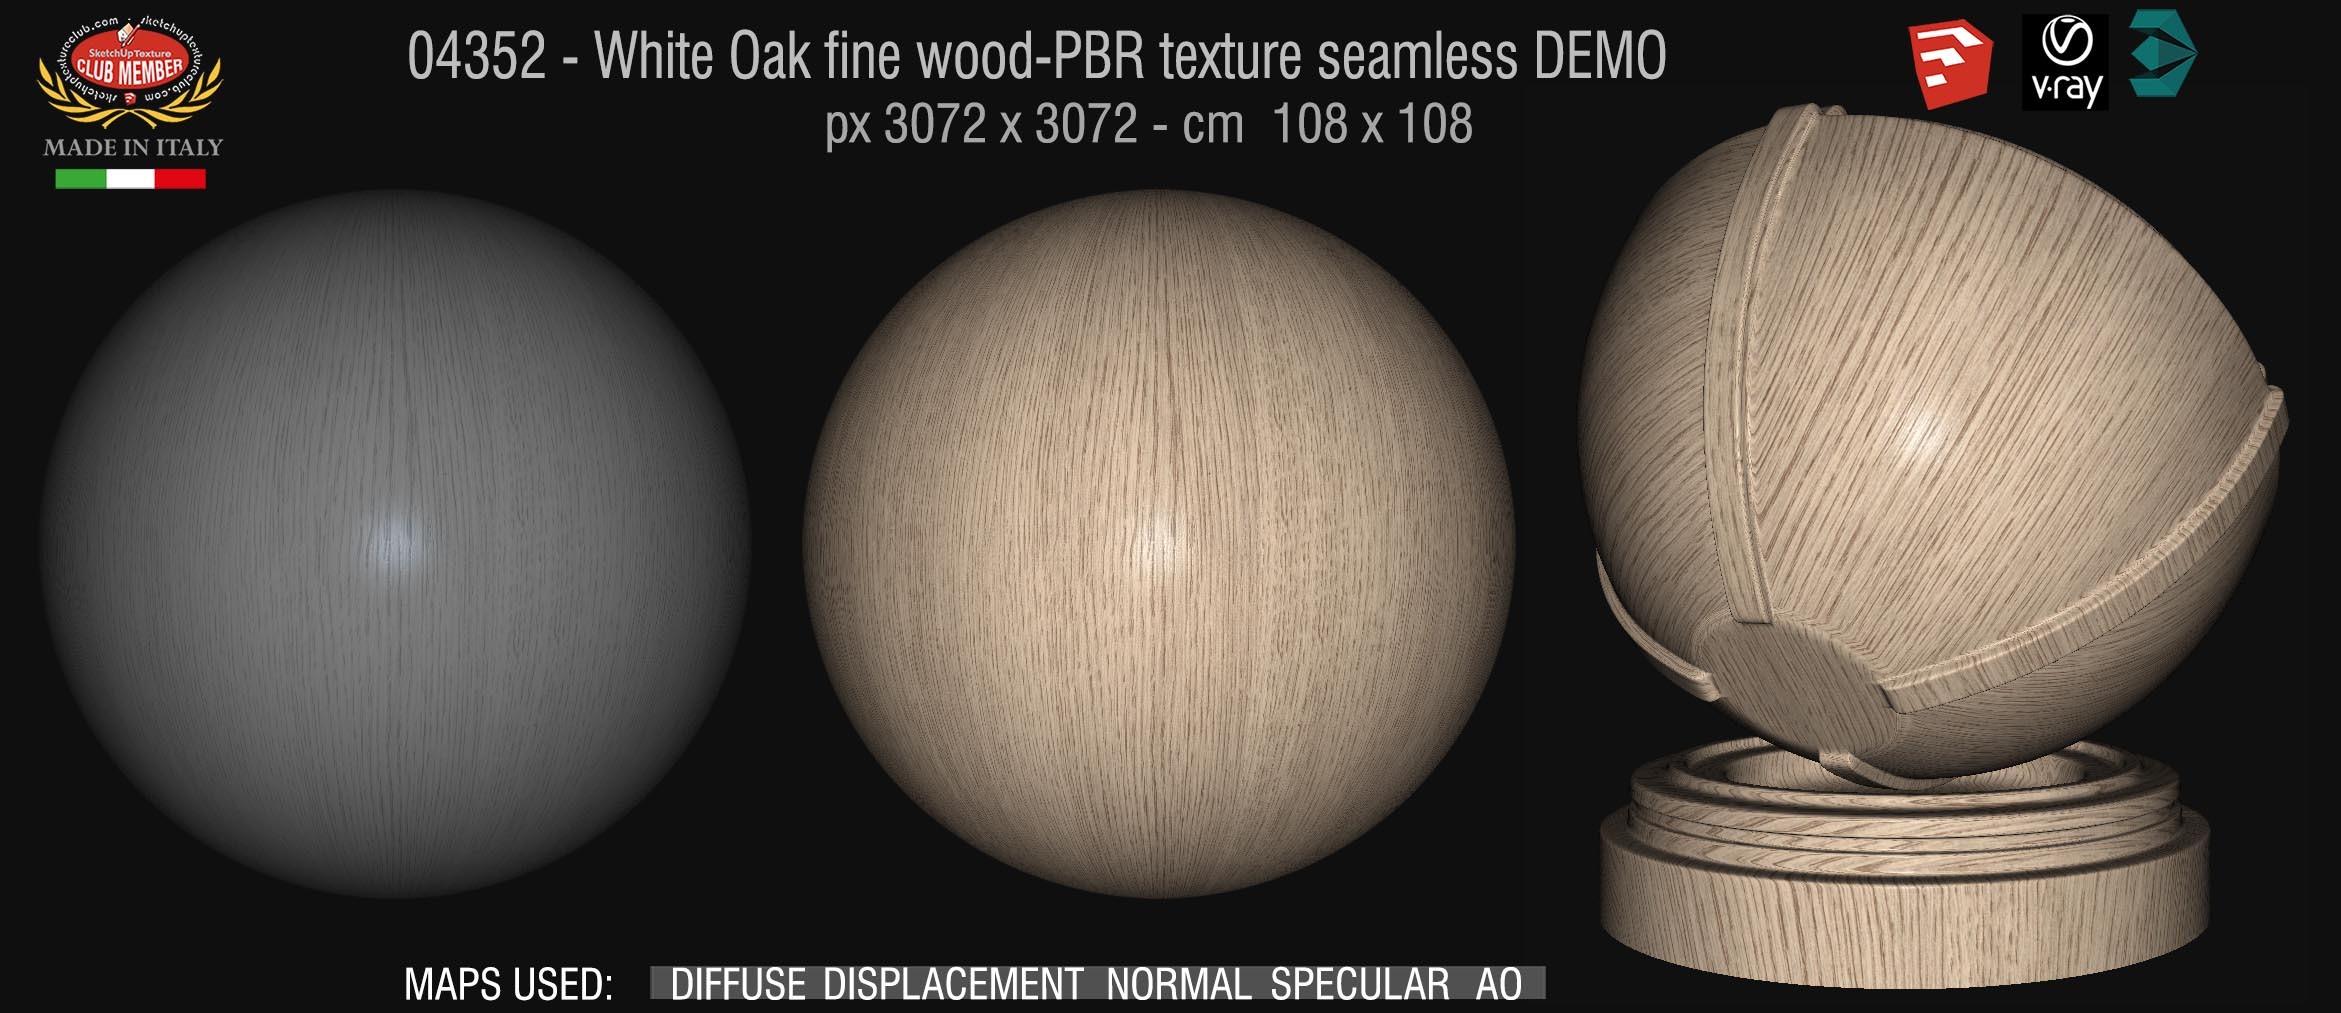 04352 White Oak fine wood-PBR texture seamless DEMO